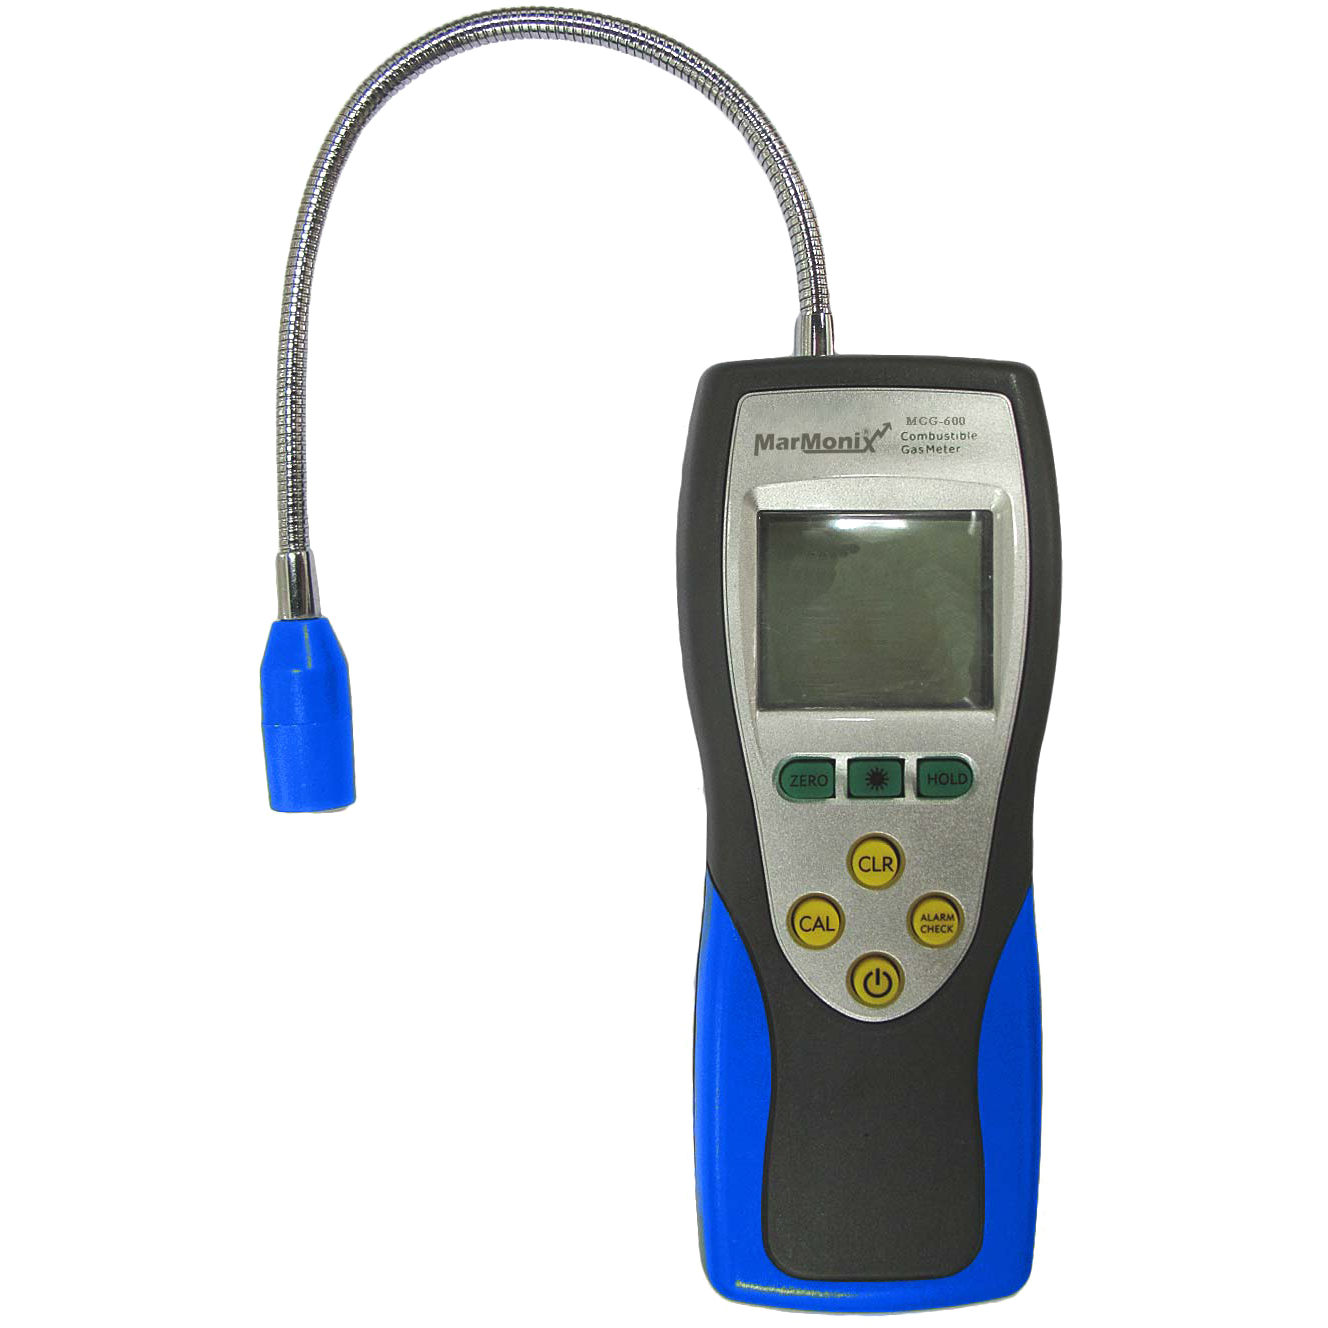 Combustible Gas Detector MCG-600